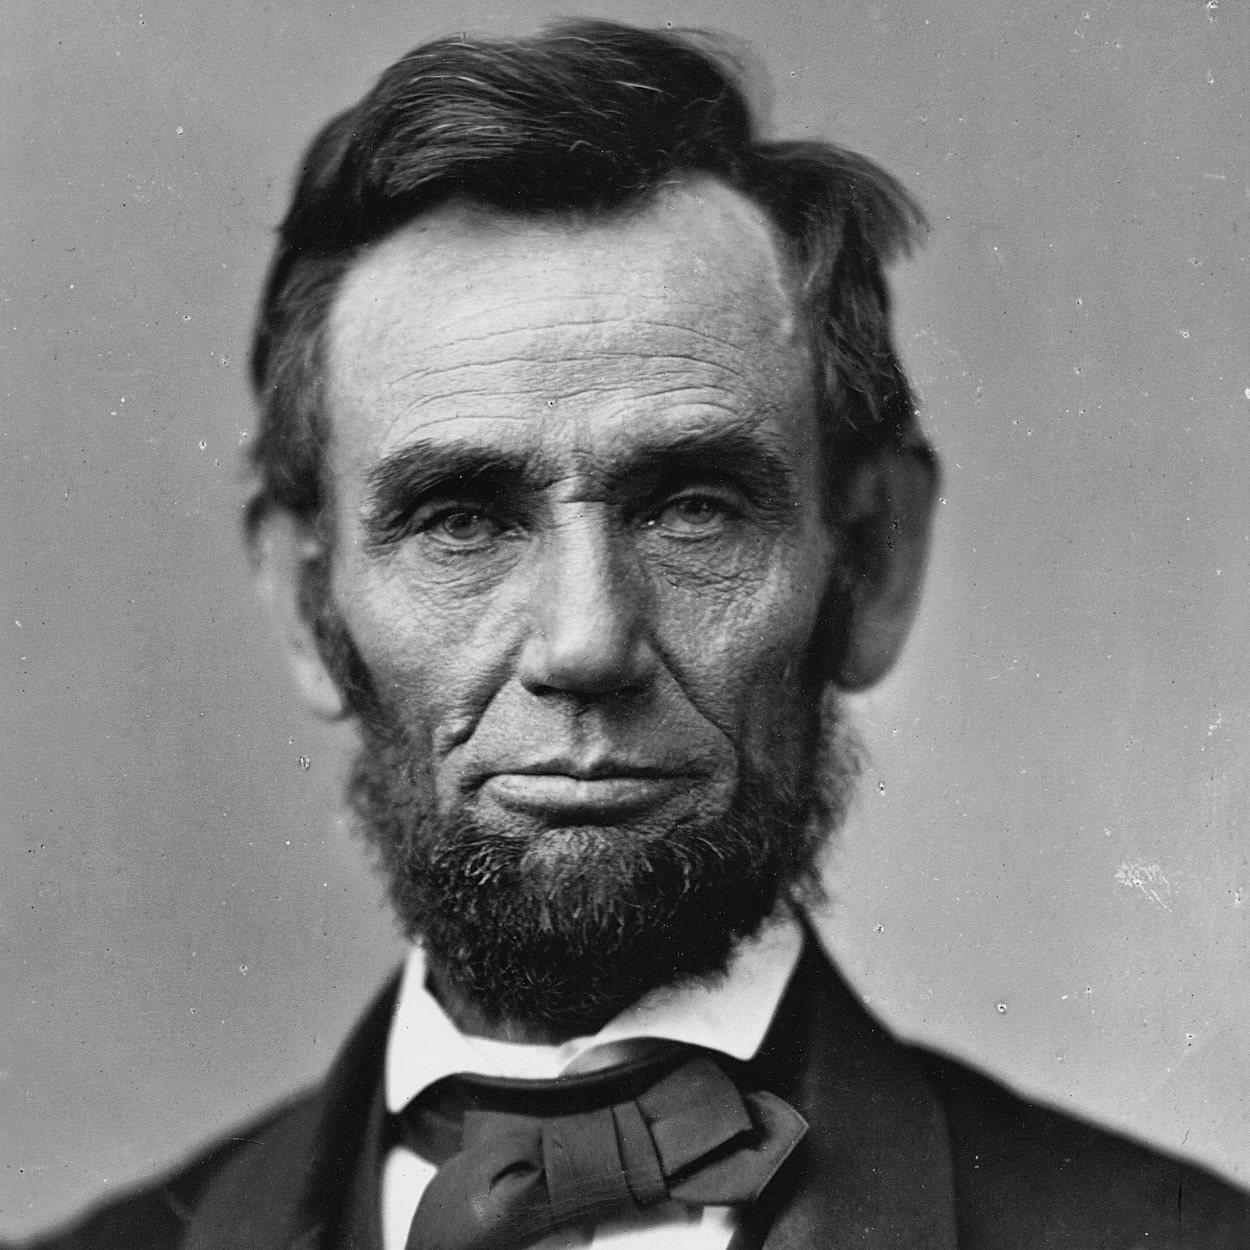 Abraham Lincoln: Biography, U.S. President, Abolitionist